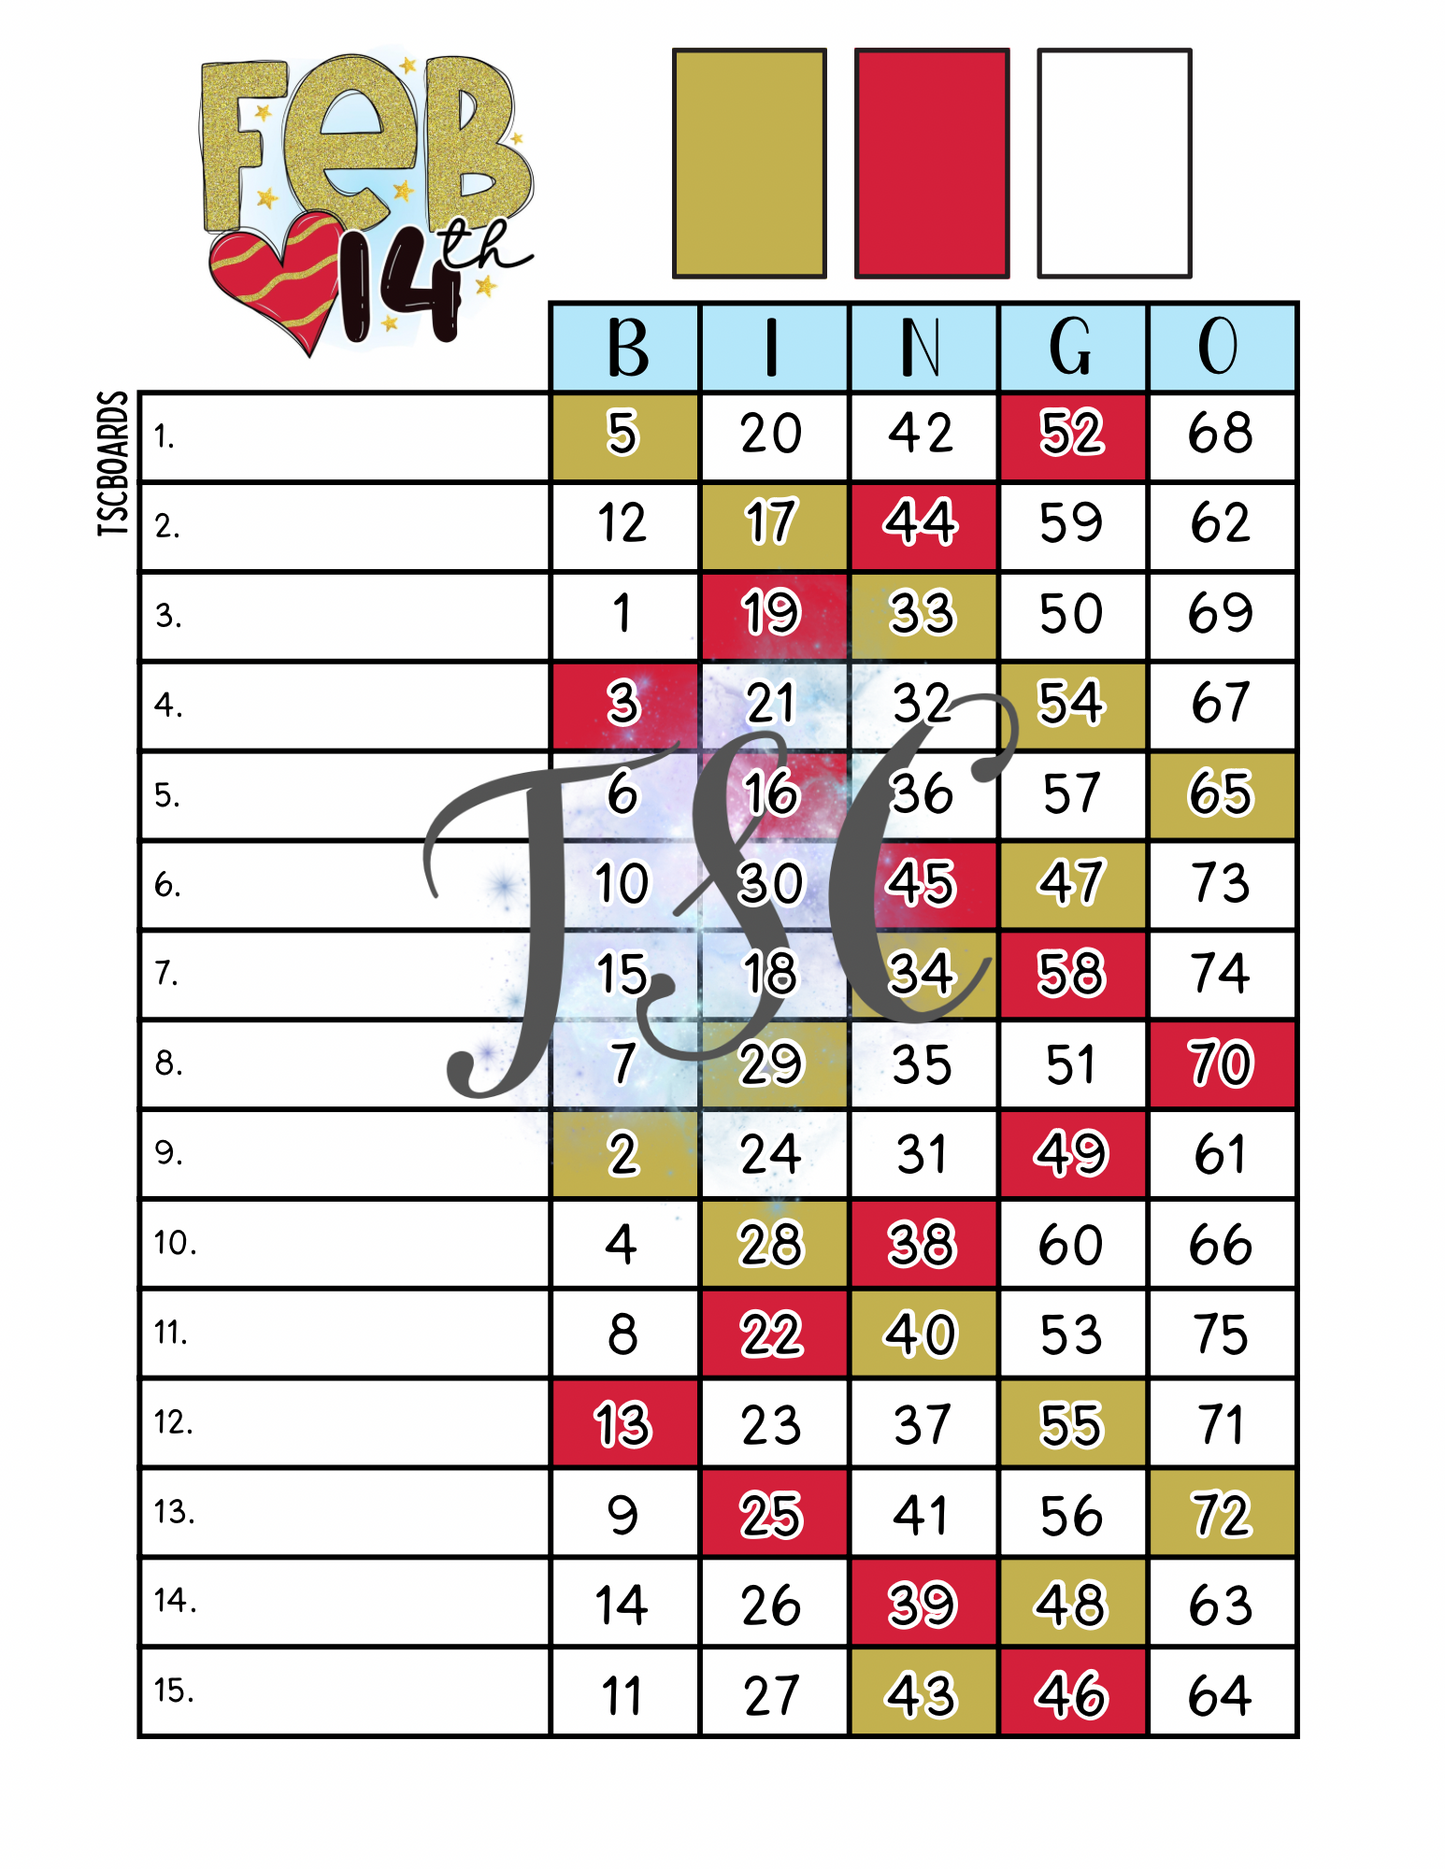 Feb 14th Bingo Board 1-75 Ball